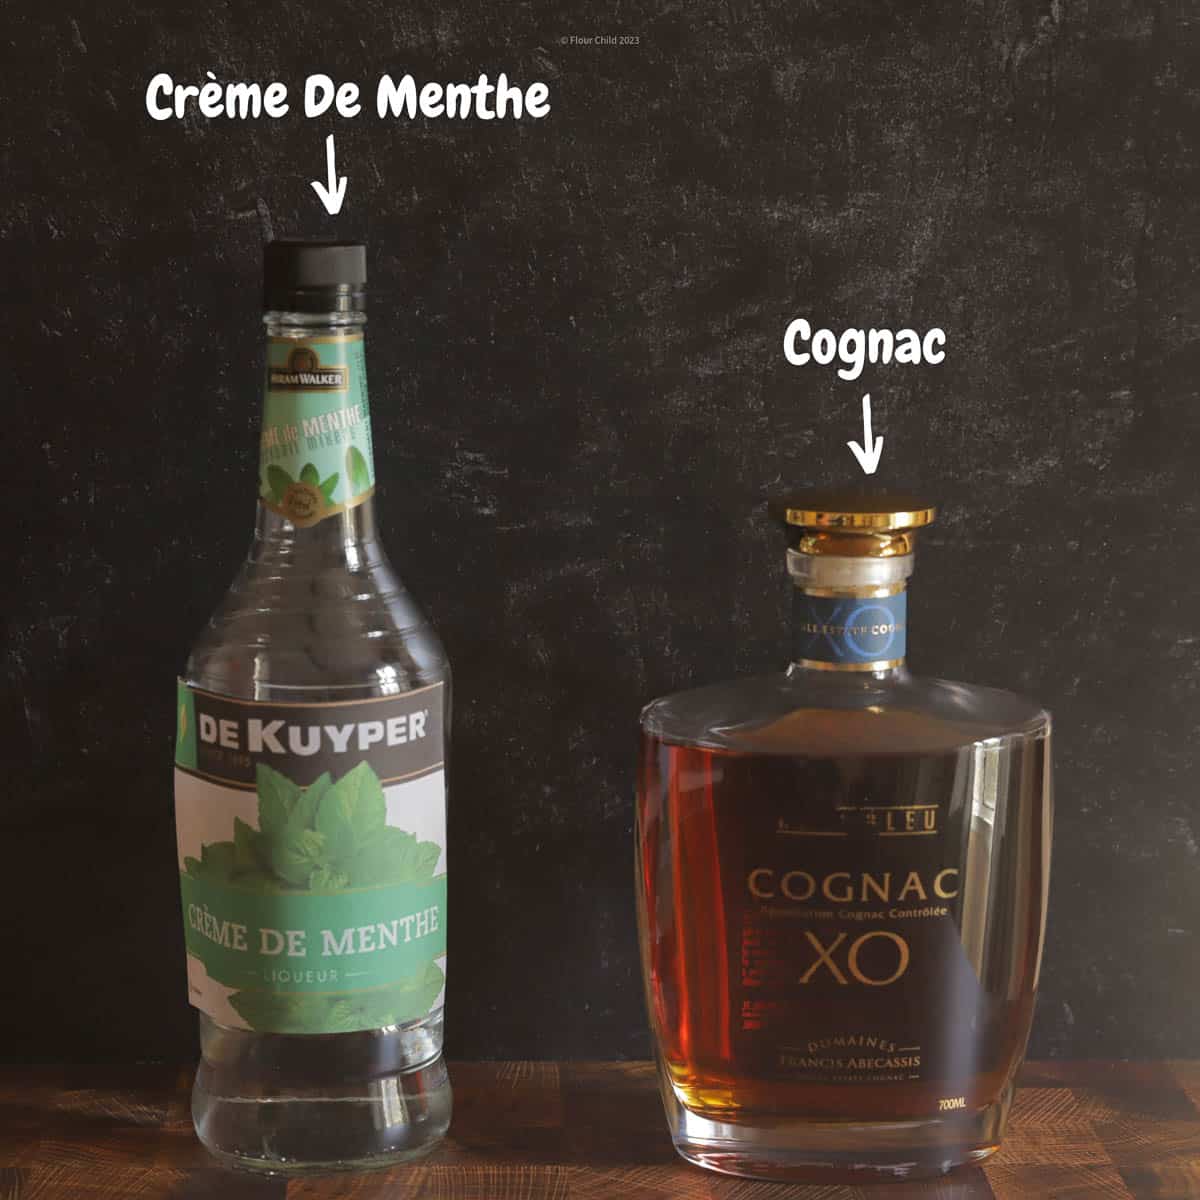 Bottle of Cognac and Creme de Menthe on a black background